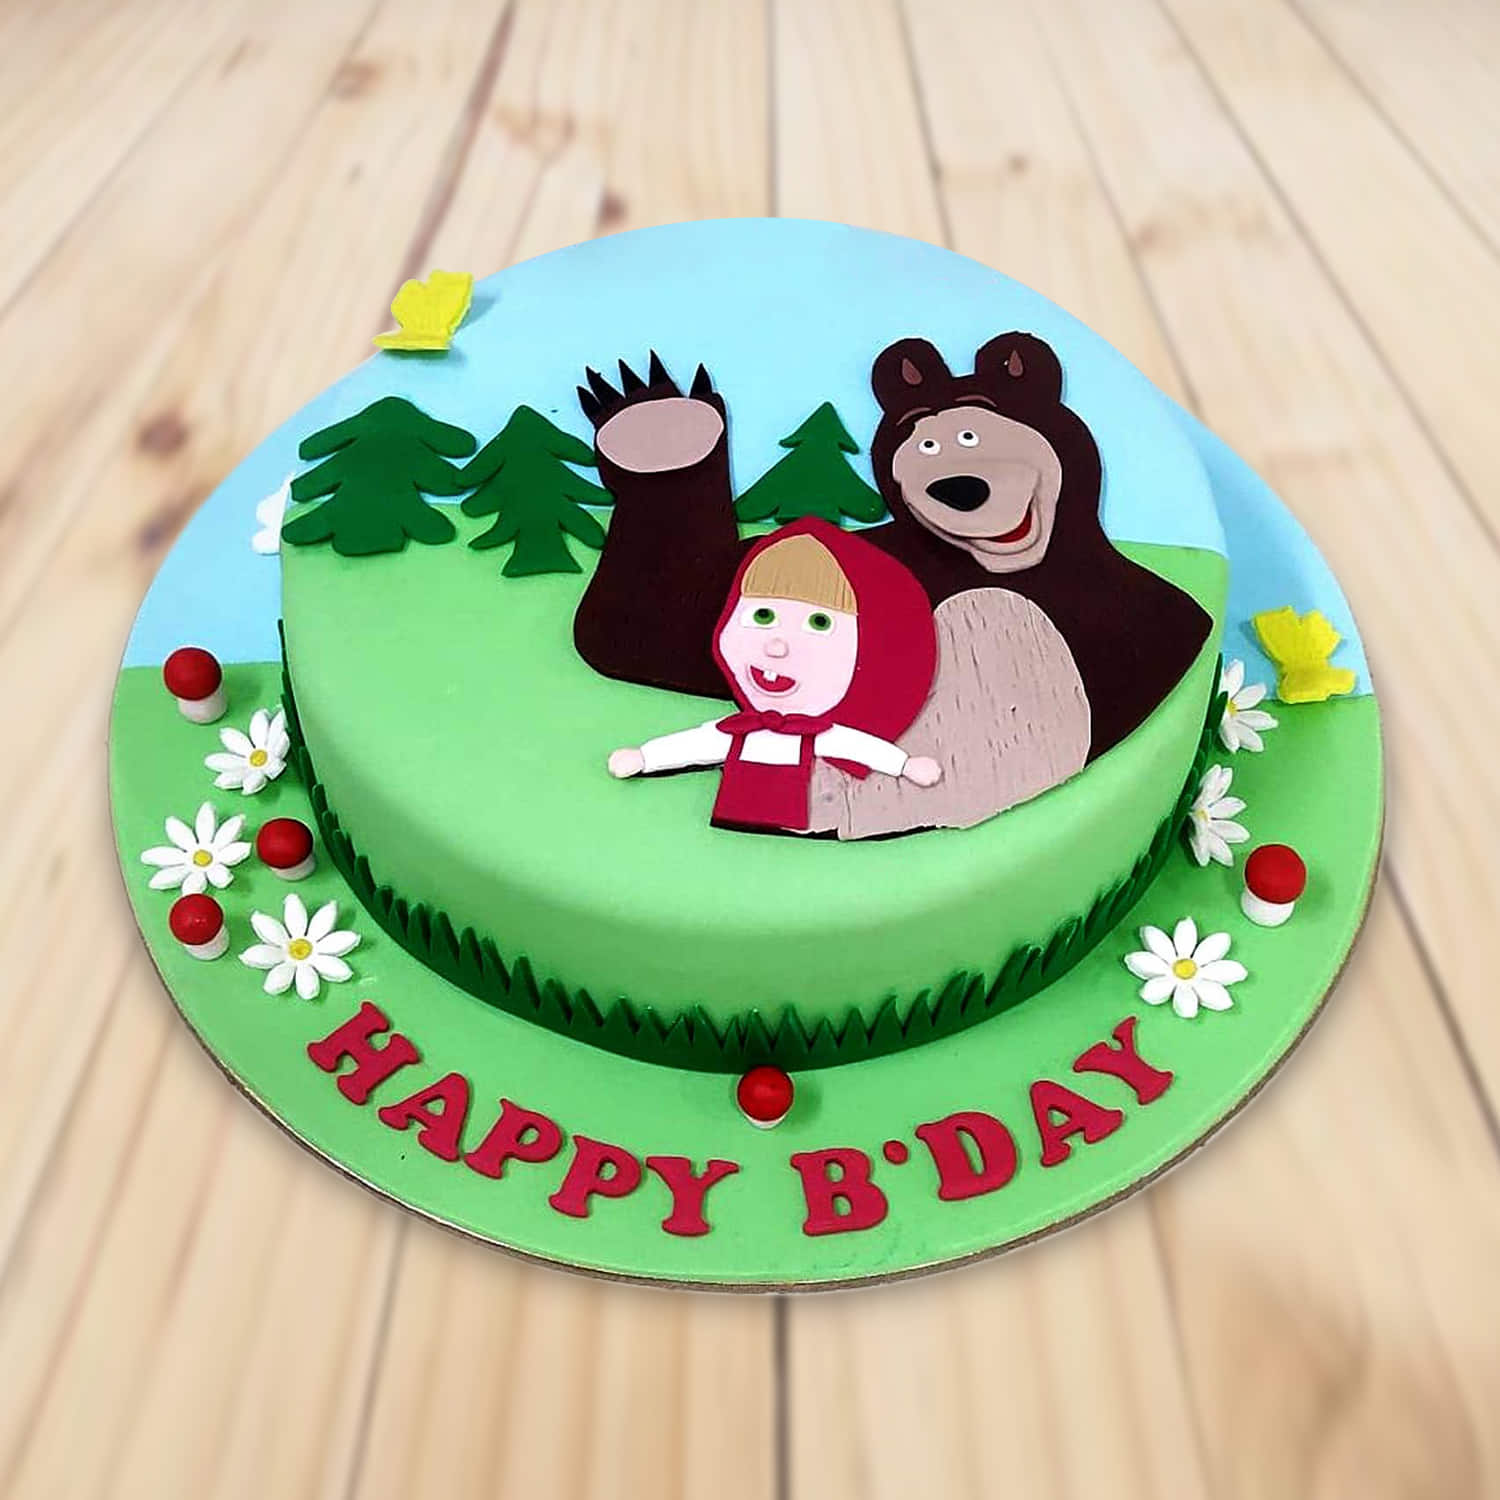 Masha and the Bear cake design / Masha and the bear birthday cake design. -  YouTube